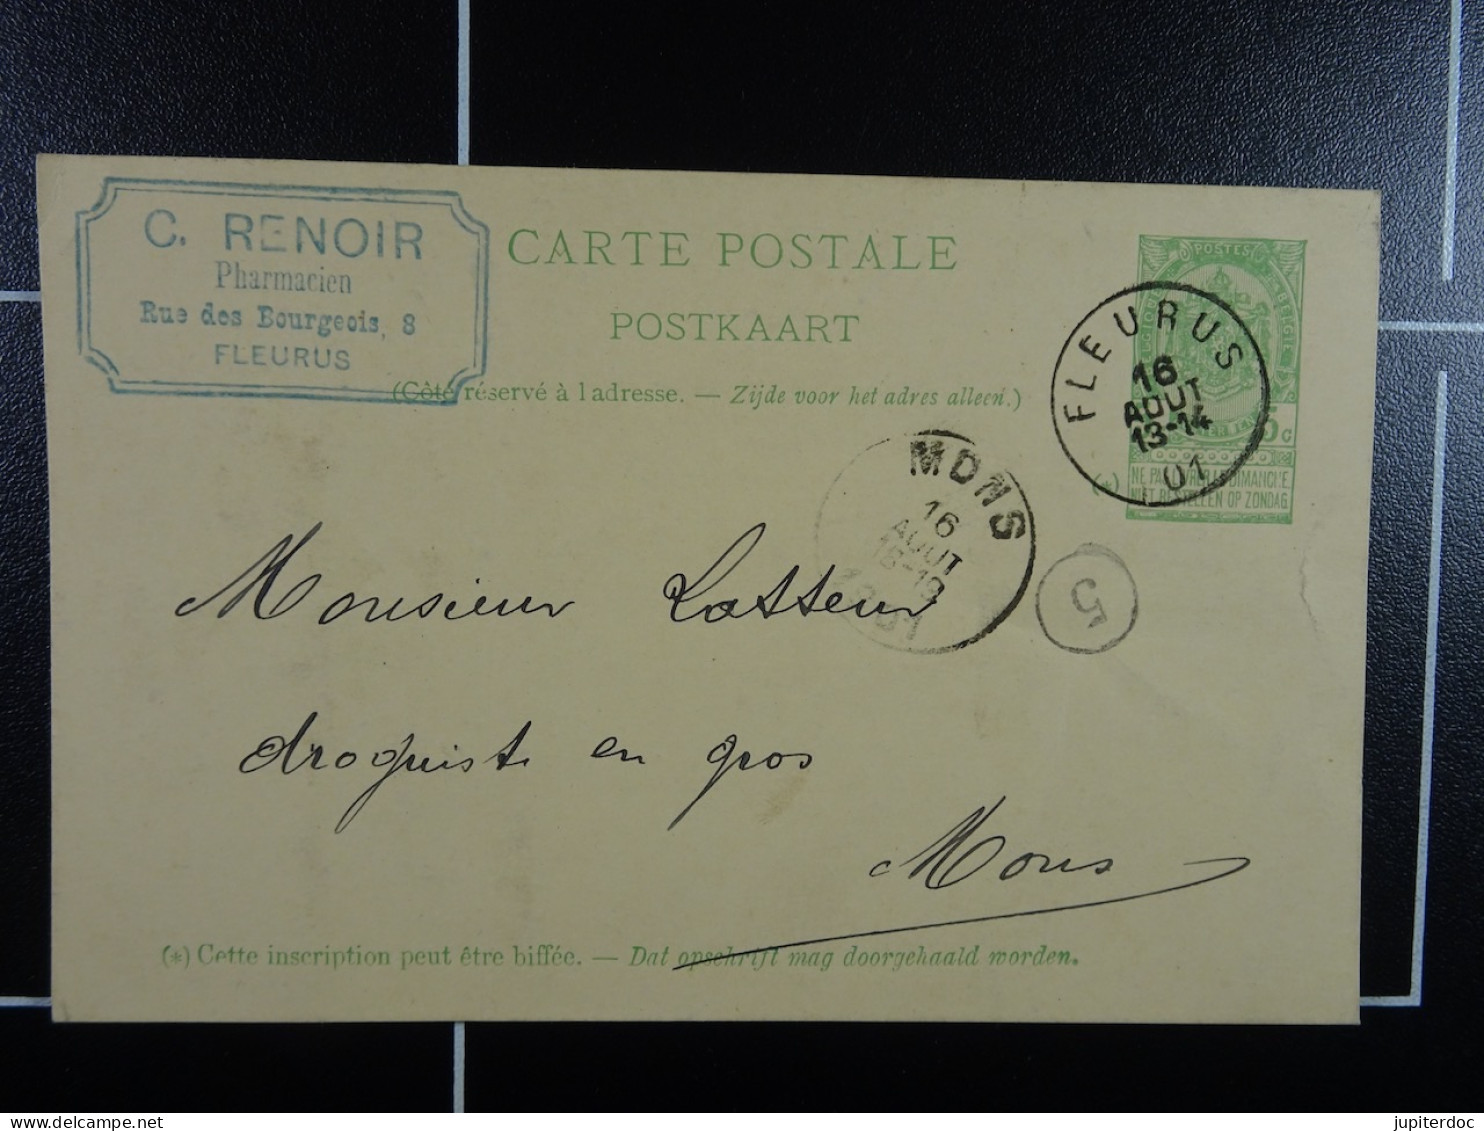 C. Renoir Pharmacien Fleurus - Shopkeepers